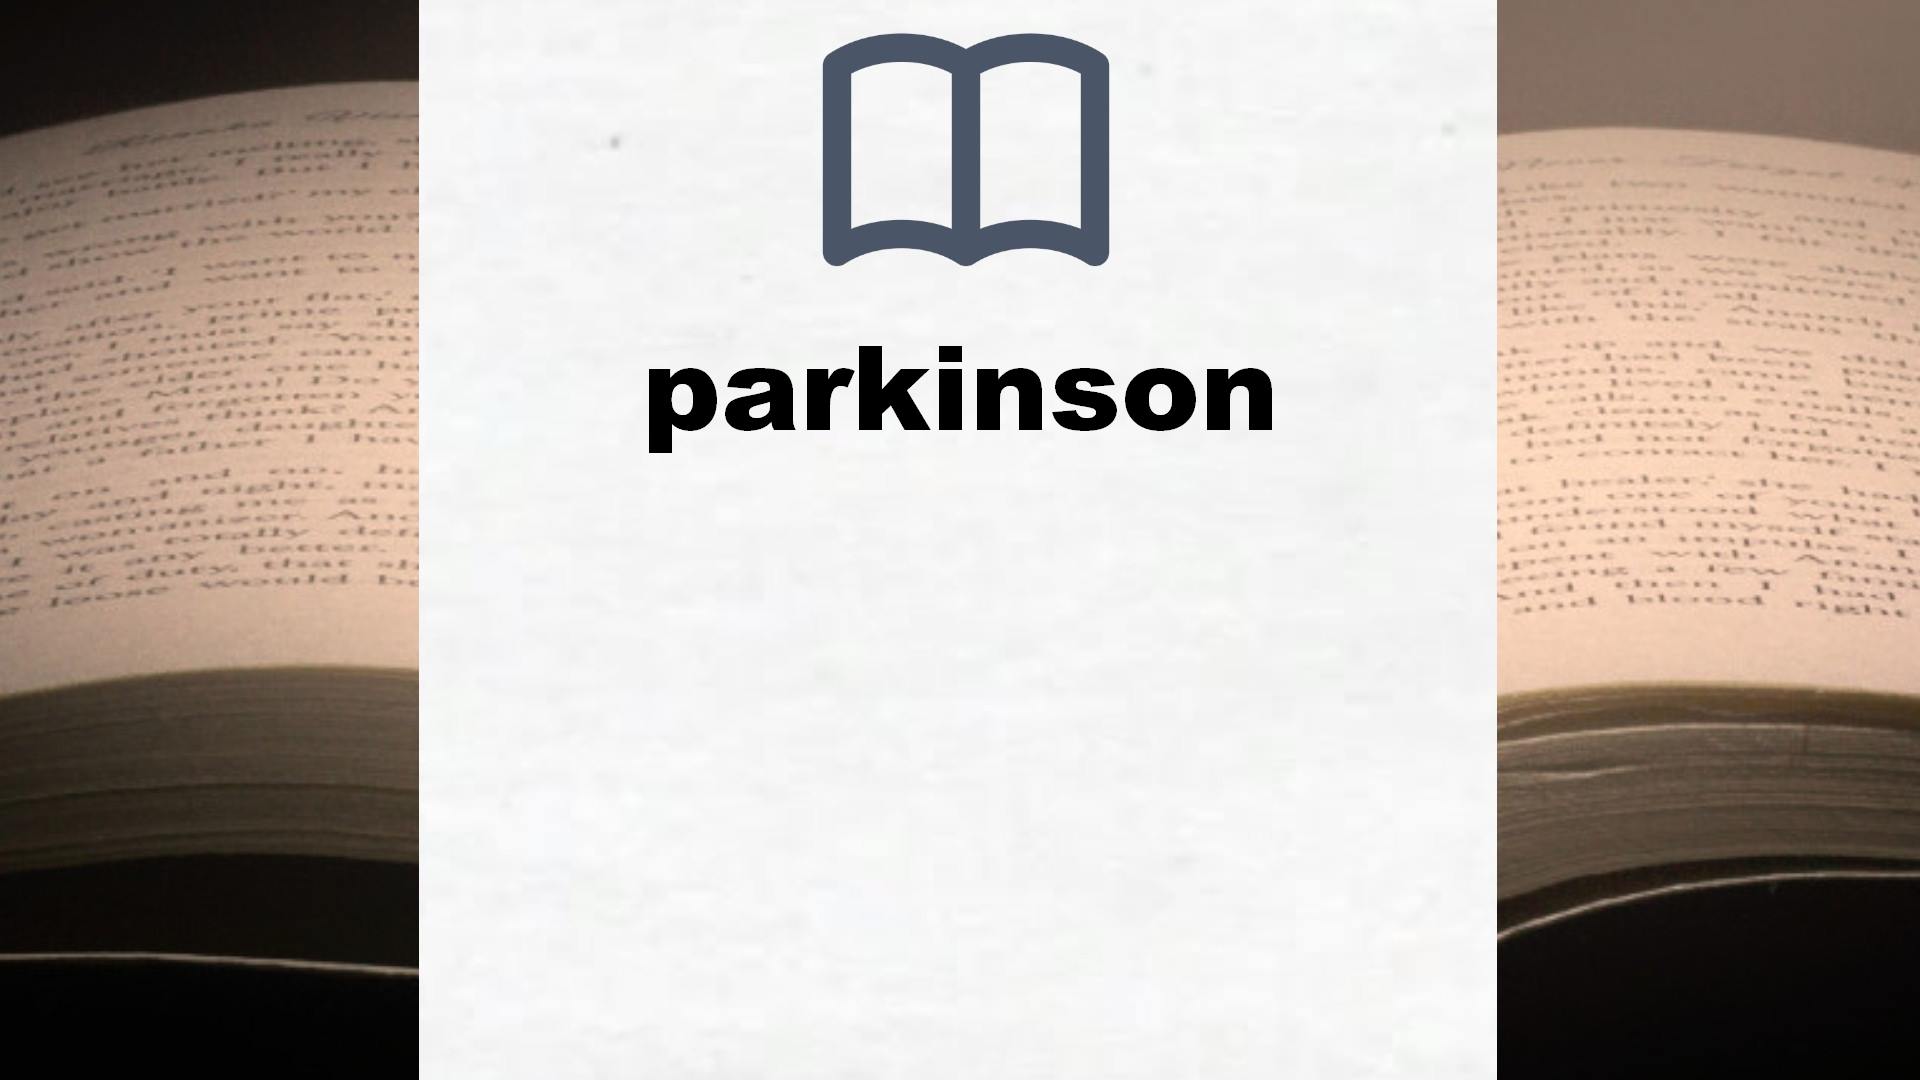 Libros sobre parkinson